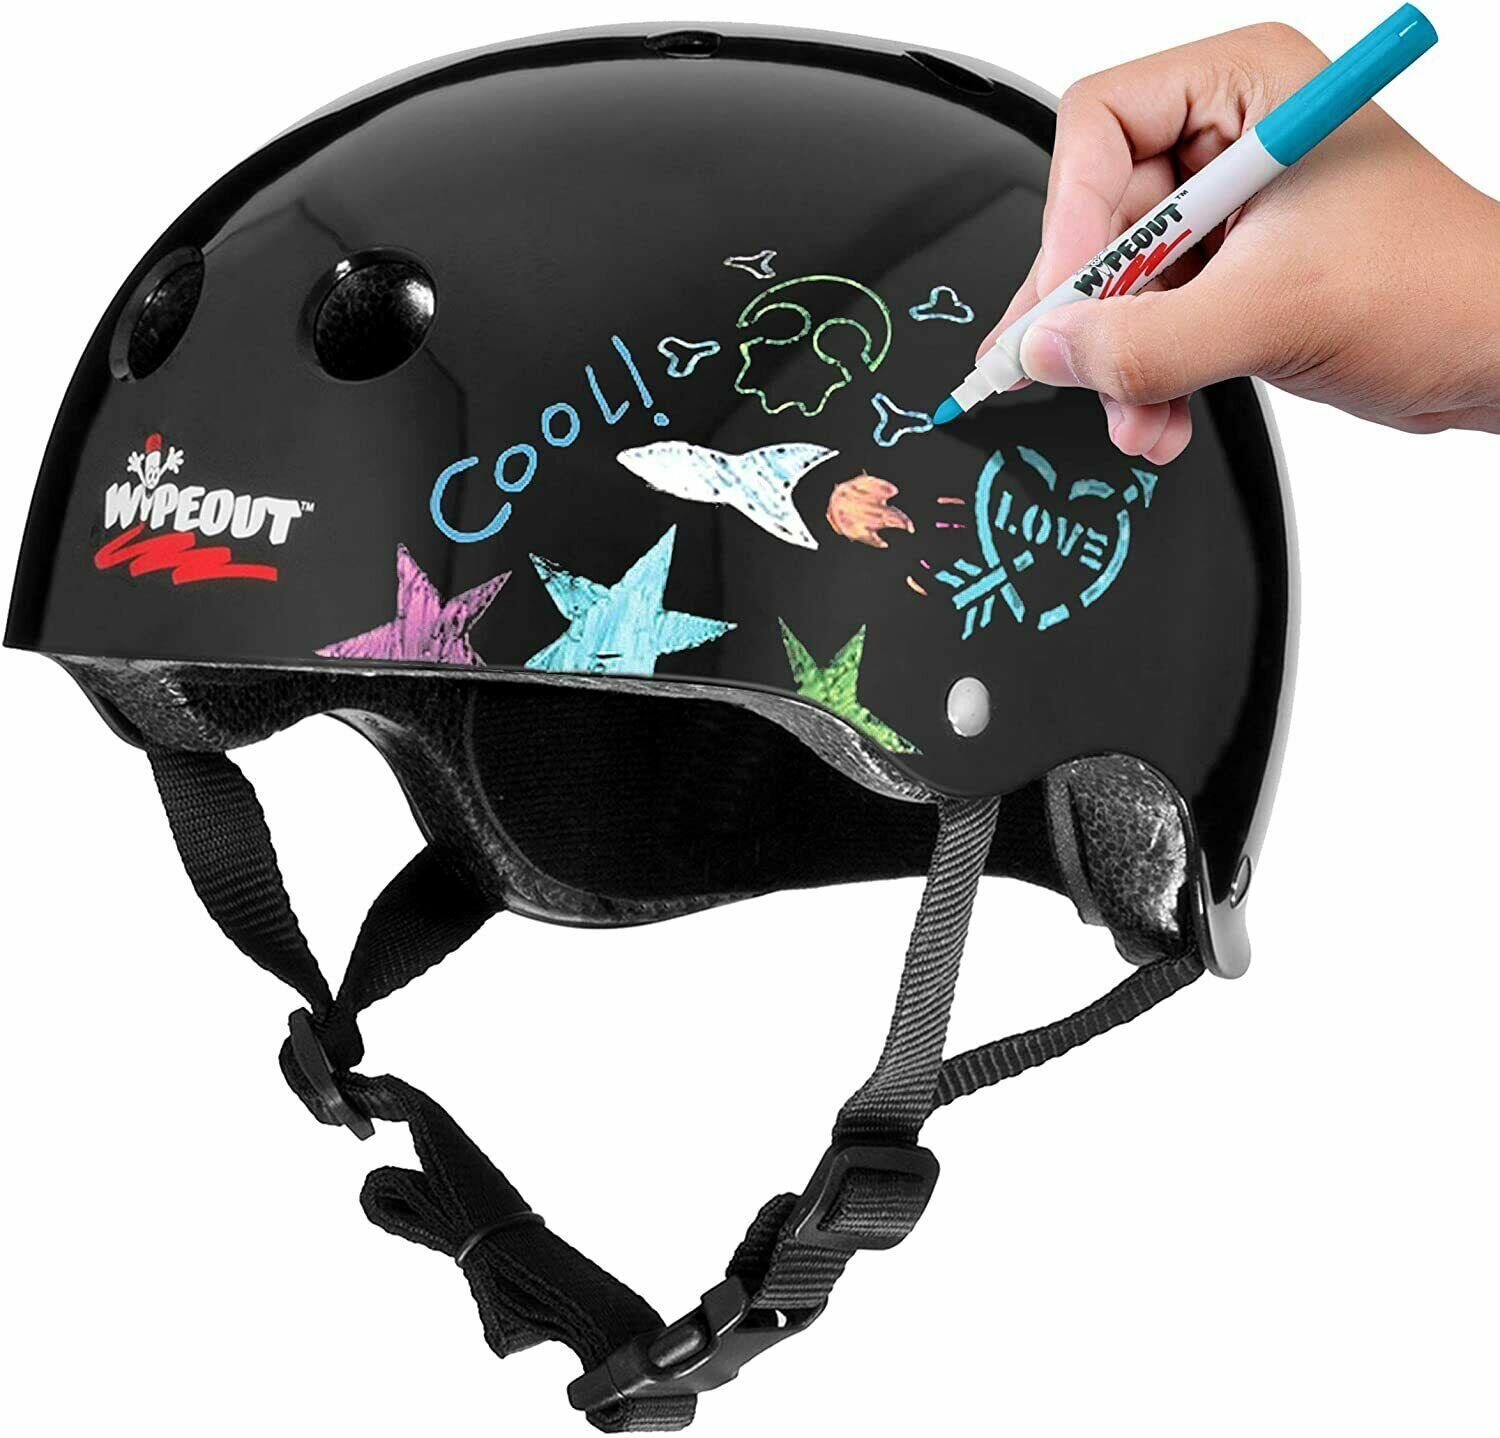 WIPEOUT Wipeout Kids Bike Scooter Skate Helmet - Create own designs - Black 8+